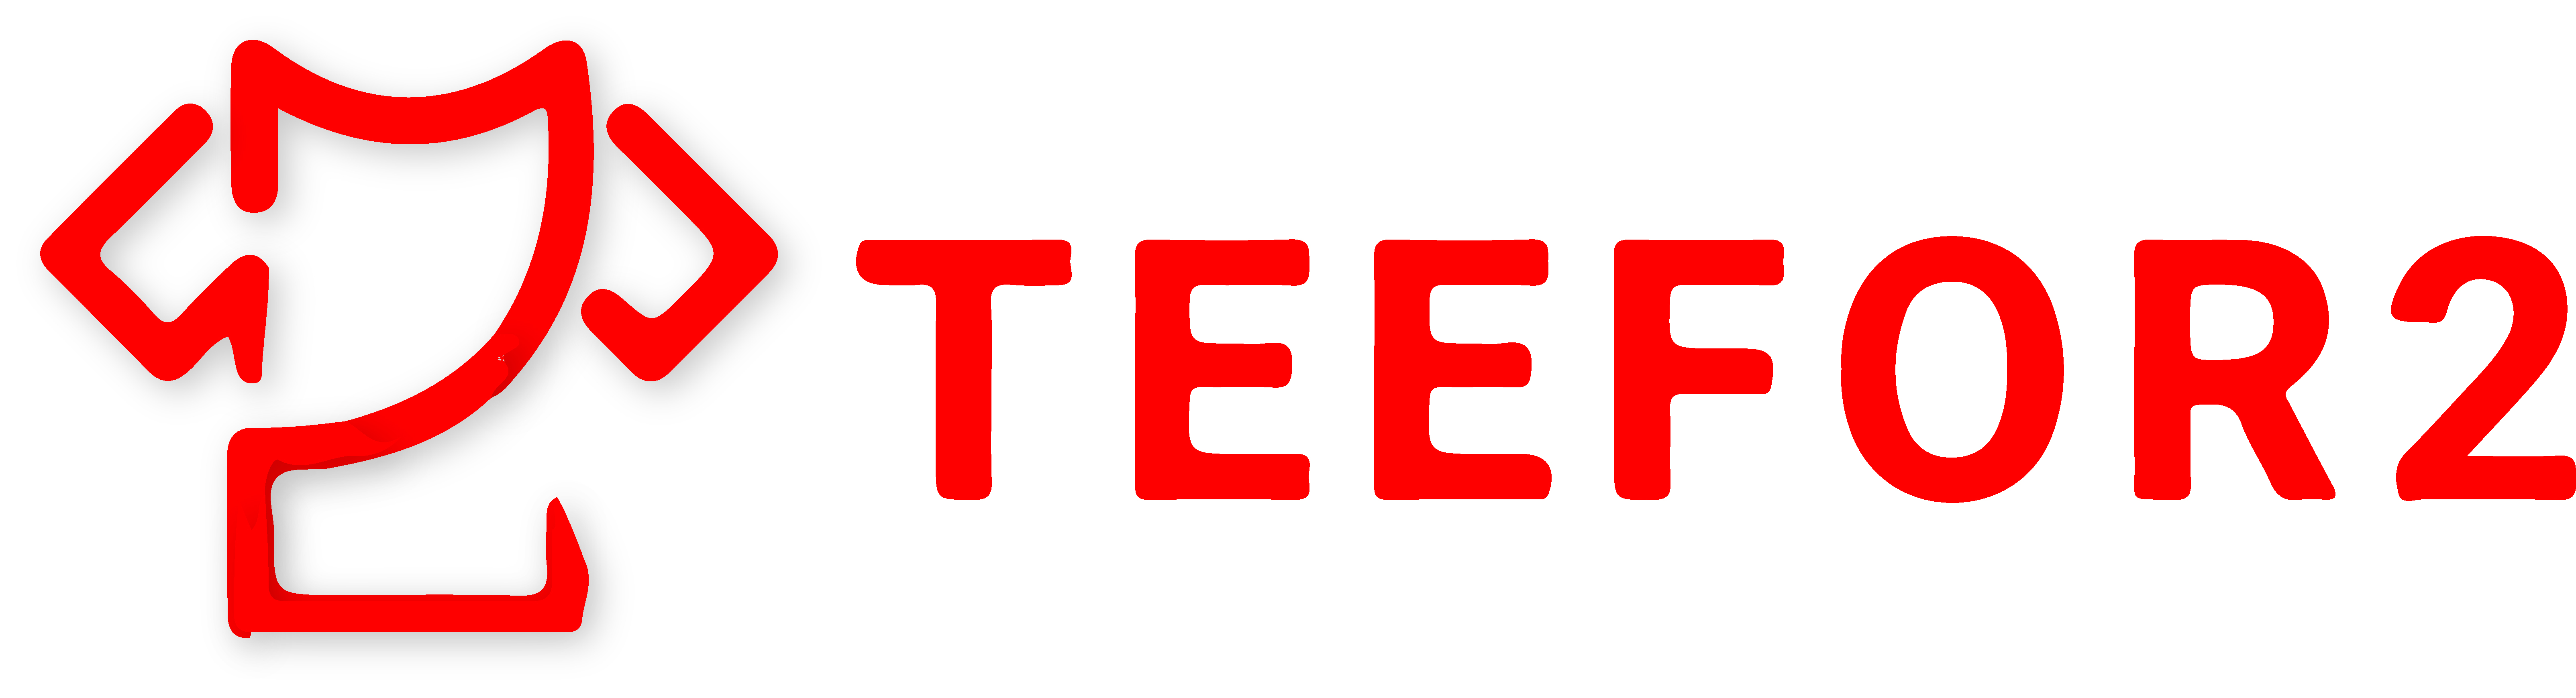 Teefor2 Inc.